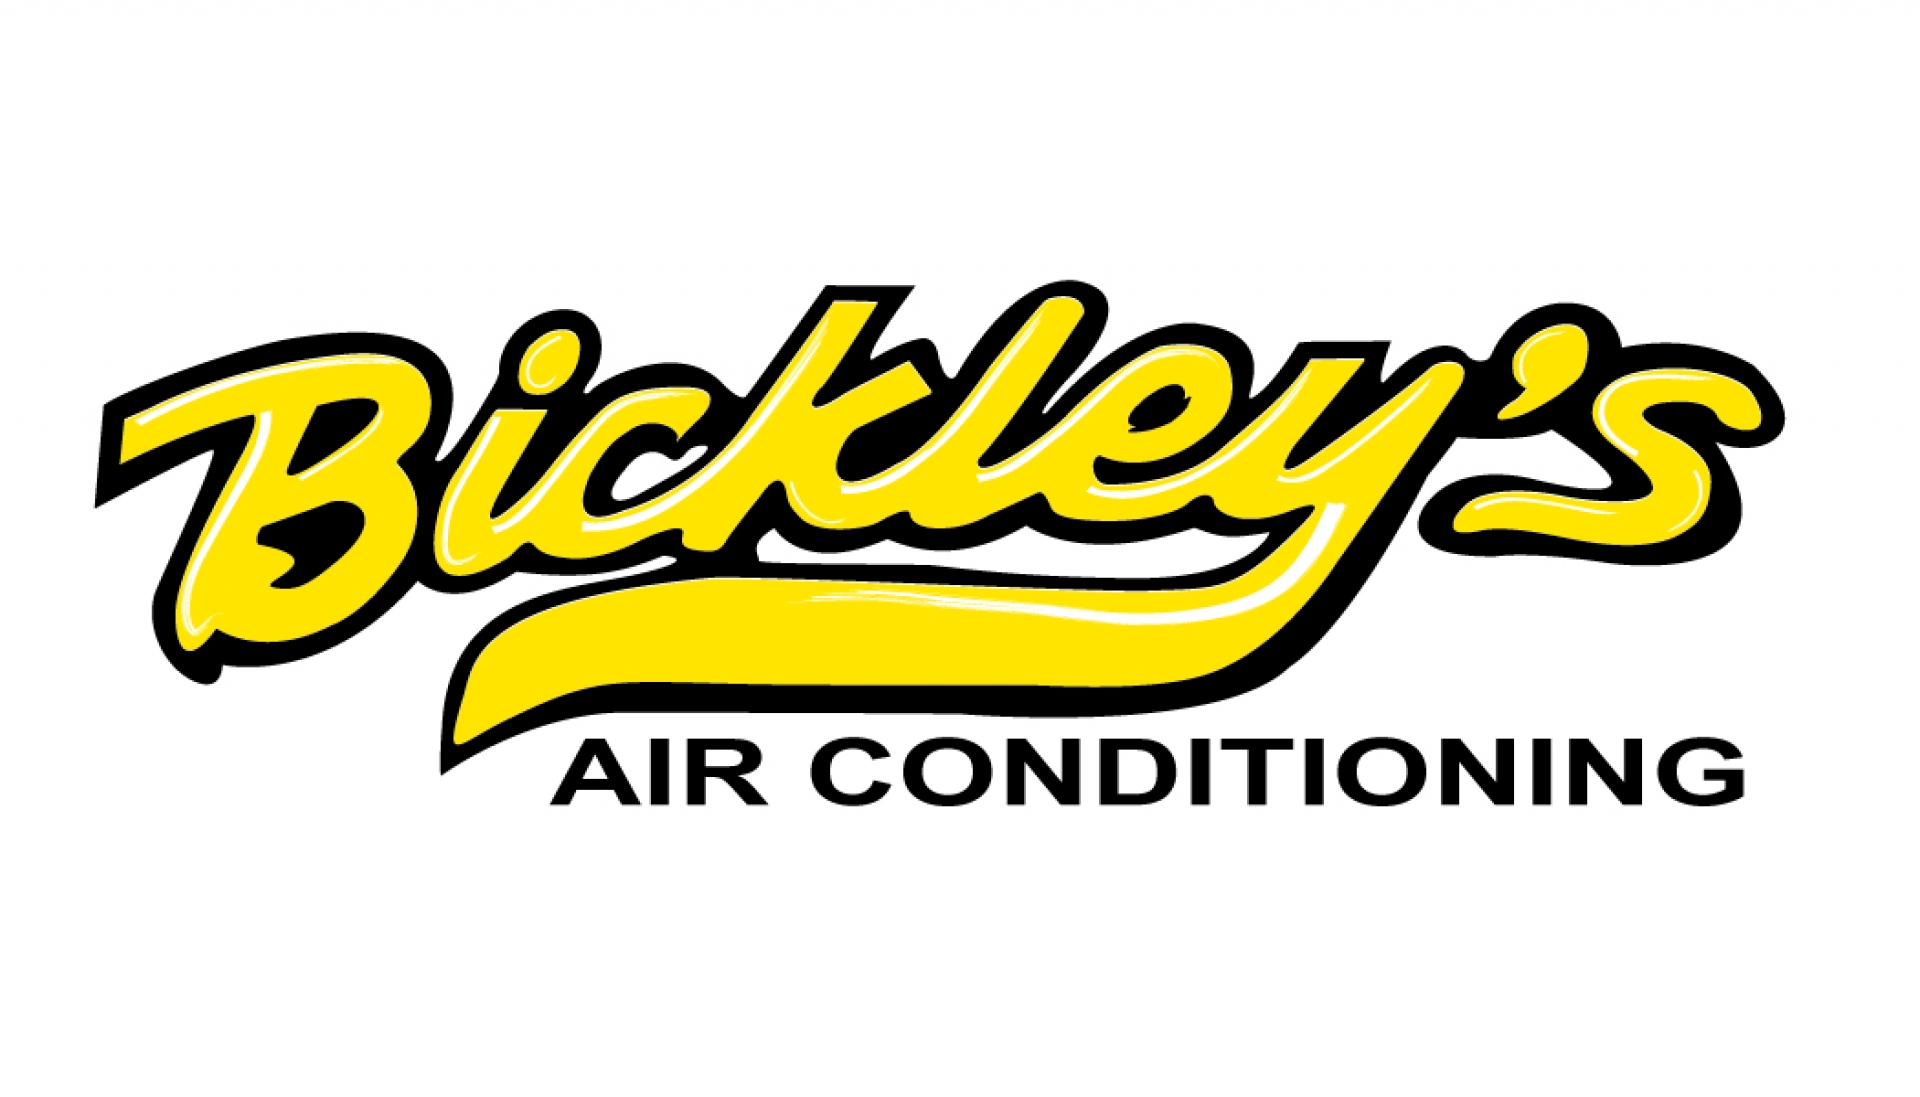 Bickleys Air Conditioning & Heating logo